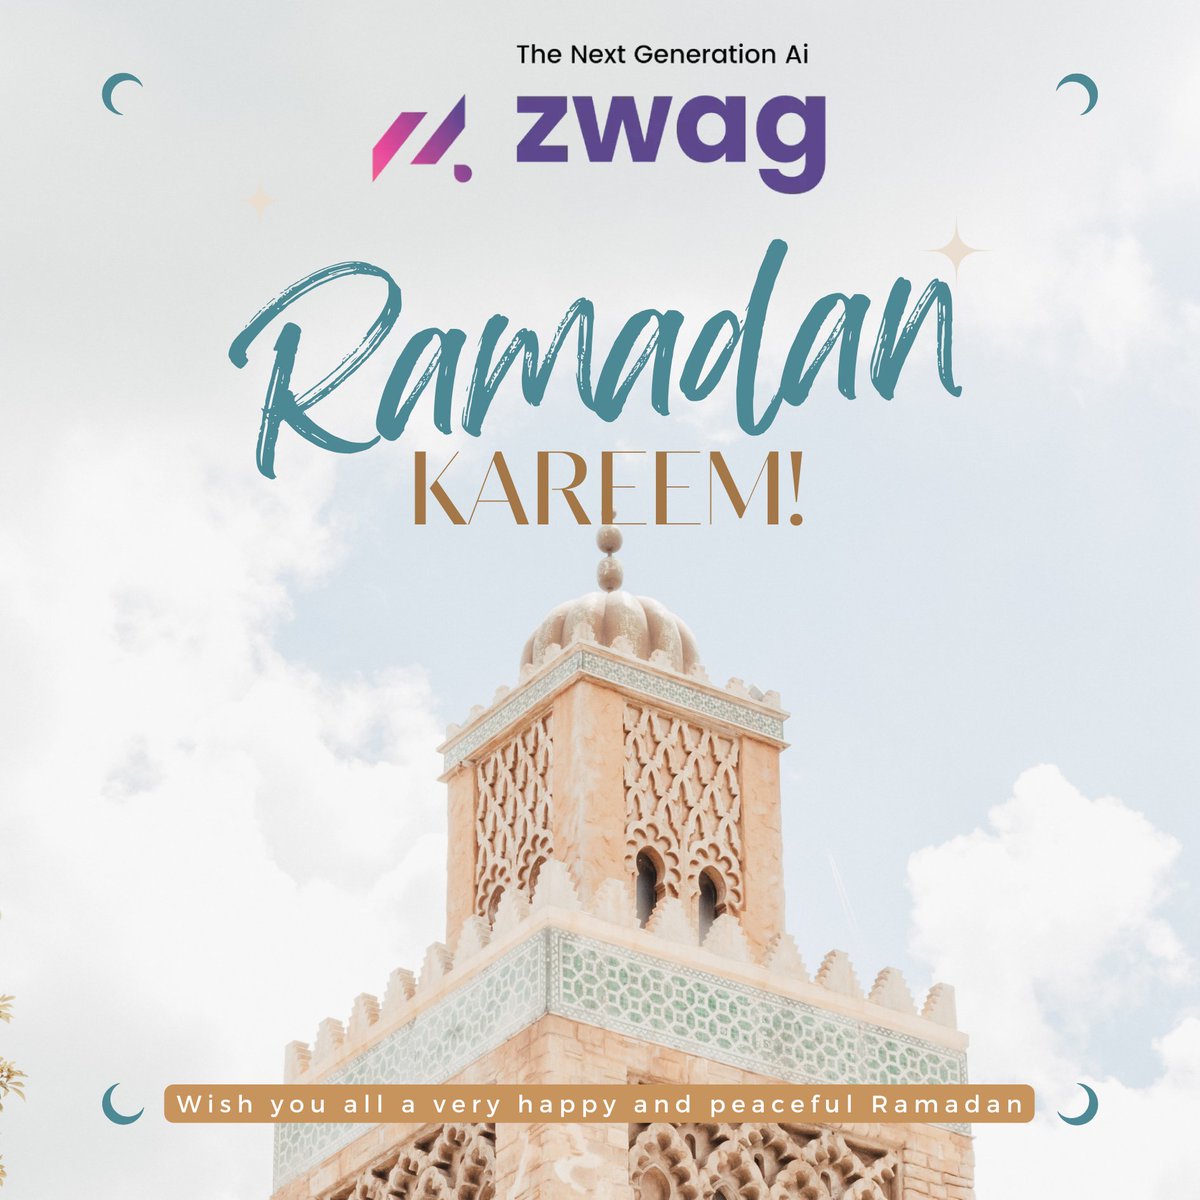 Ramadan Kareem! May this Ramadan be a time of reflection, growth, and blessings for you!

smpl.is/8sopn

#zwagai #zwag #ai #bespokeai #bespokeaisolution  #AItechnology #zwagae #mydubai #DubaiTech #DubaiInnovation #aidubai